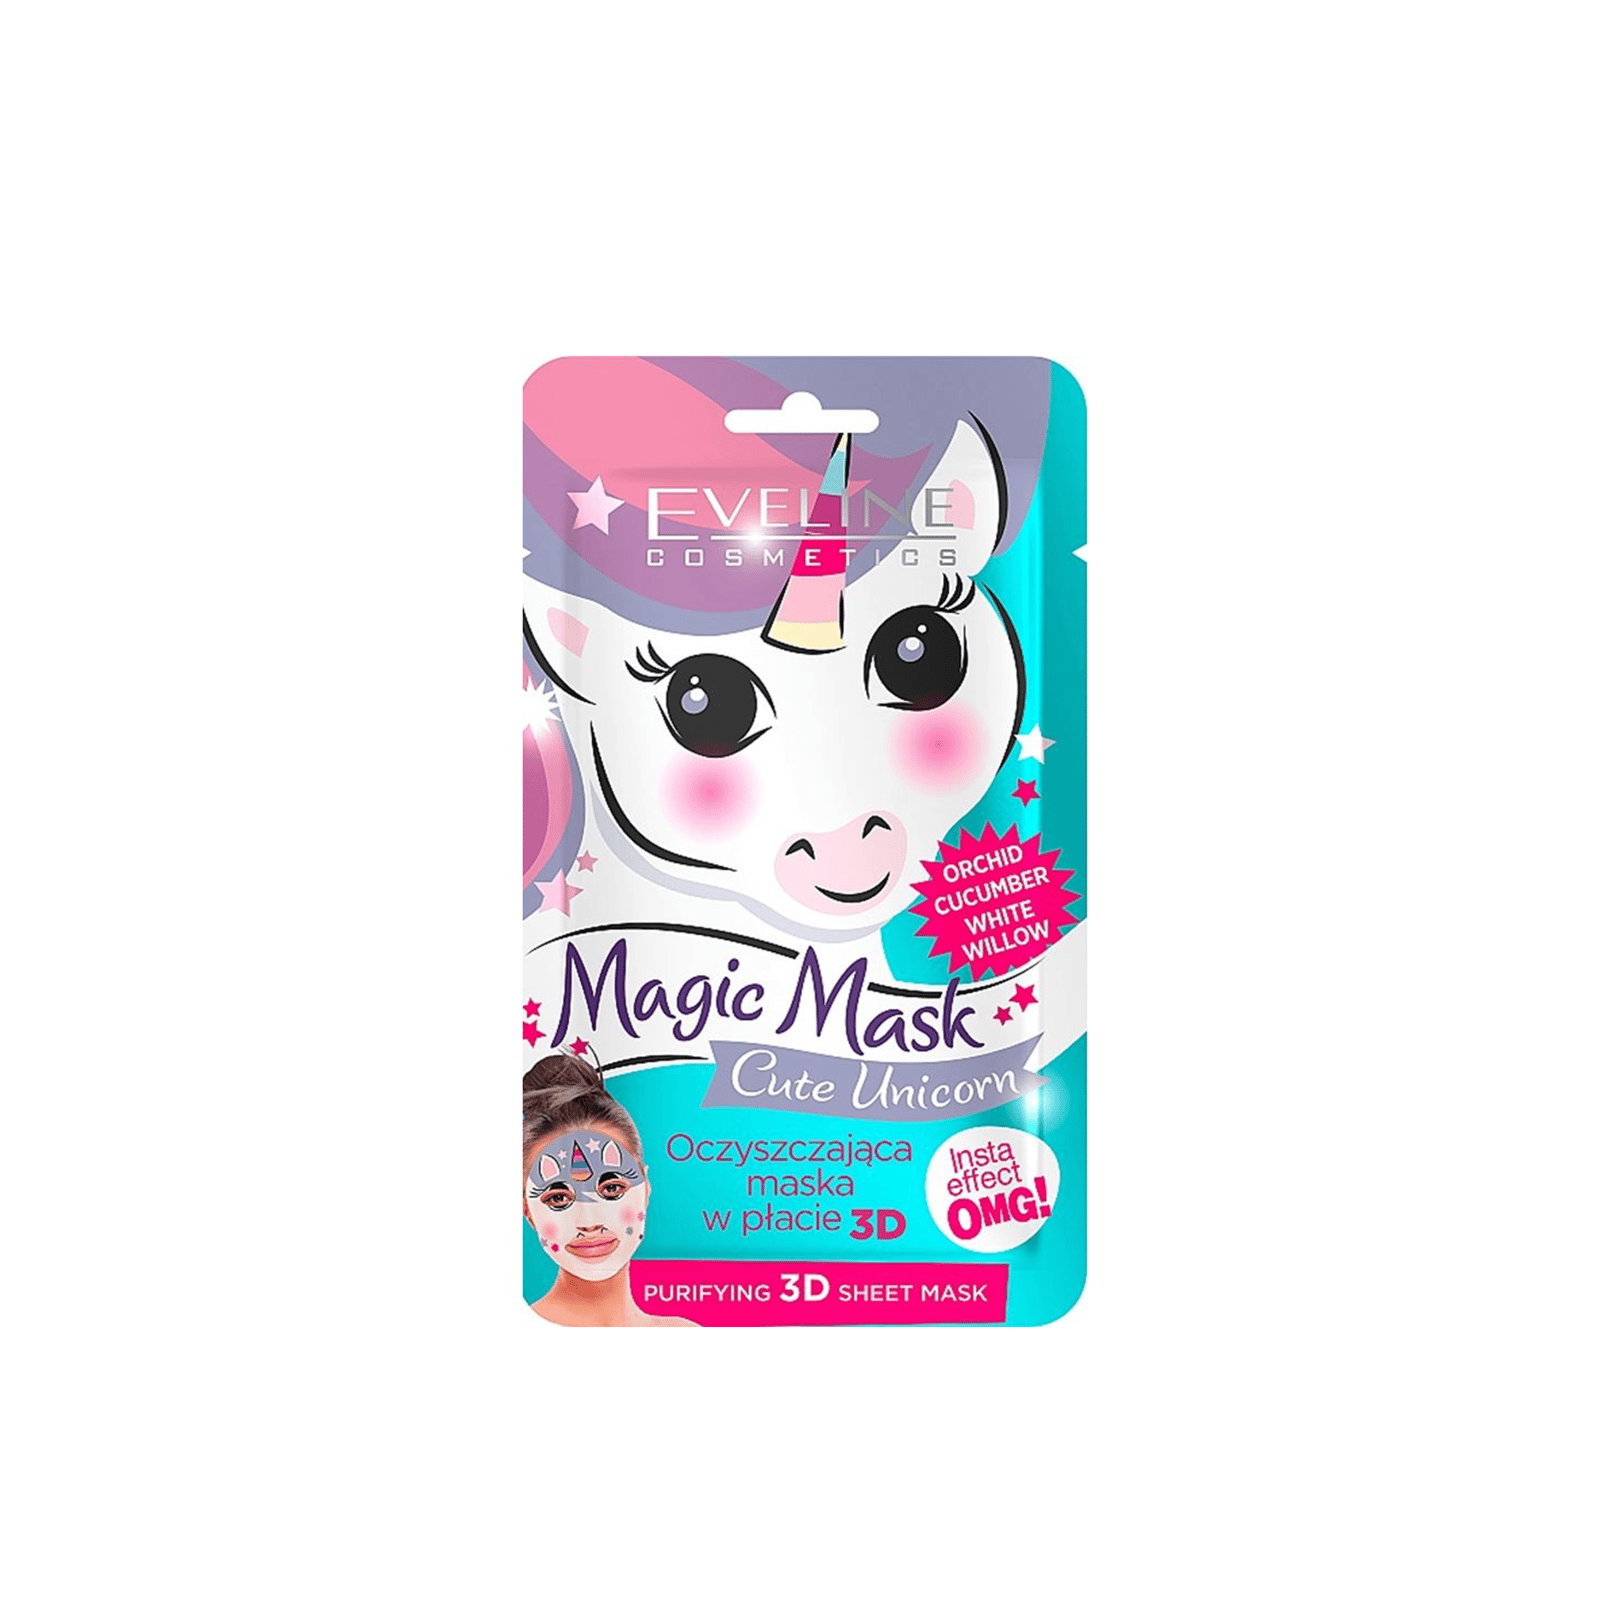 Buy Eveline Cosmetics Magic Mask Cute Unicorn Purifying 3D Sheet Mask x1 ·  USA